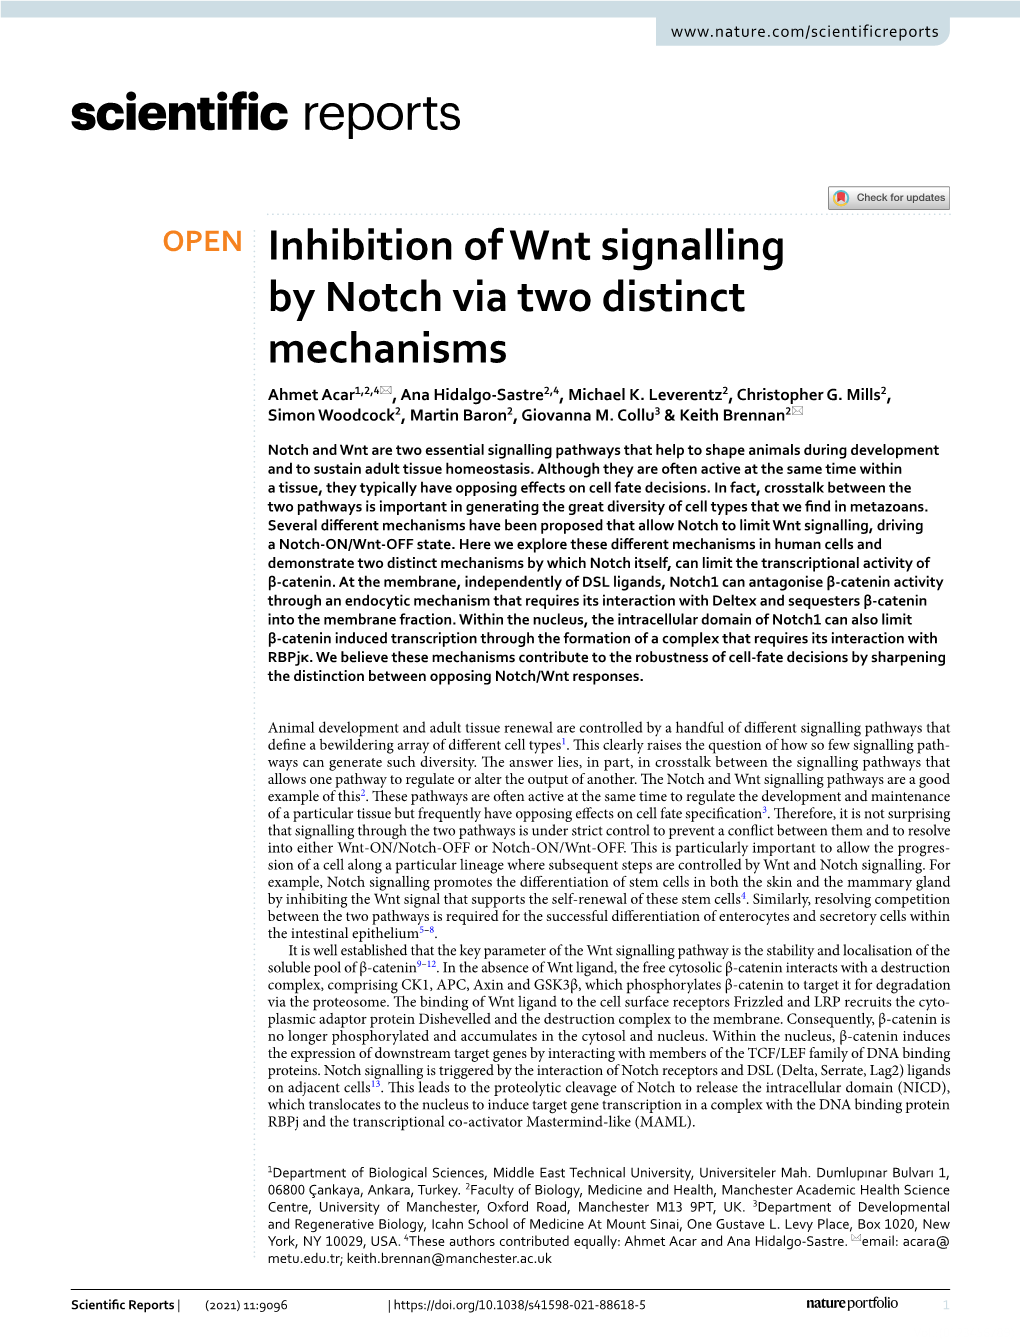 Inhibition of Wnt Signalling by Notch Via Two Distinct Mechanisms Ahmet Acar1,2,4*, Ana Hidalgo‑Sastre2,4, Michael K